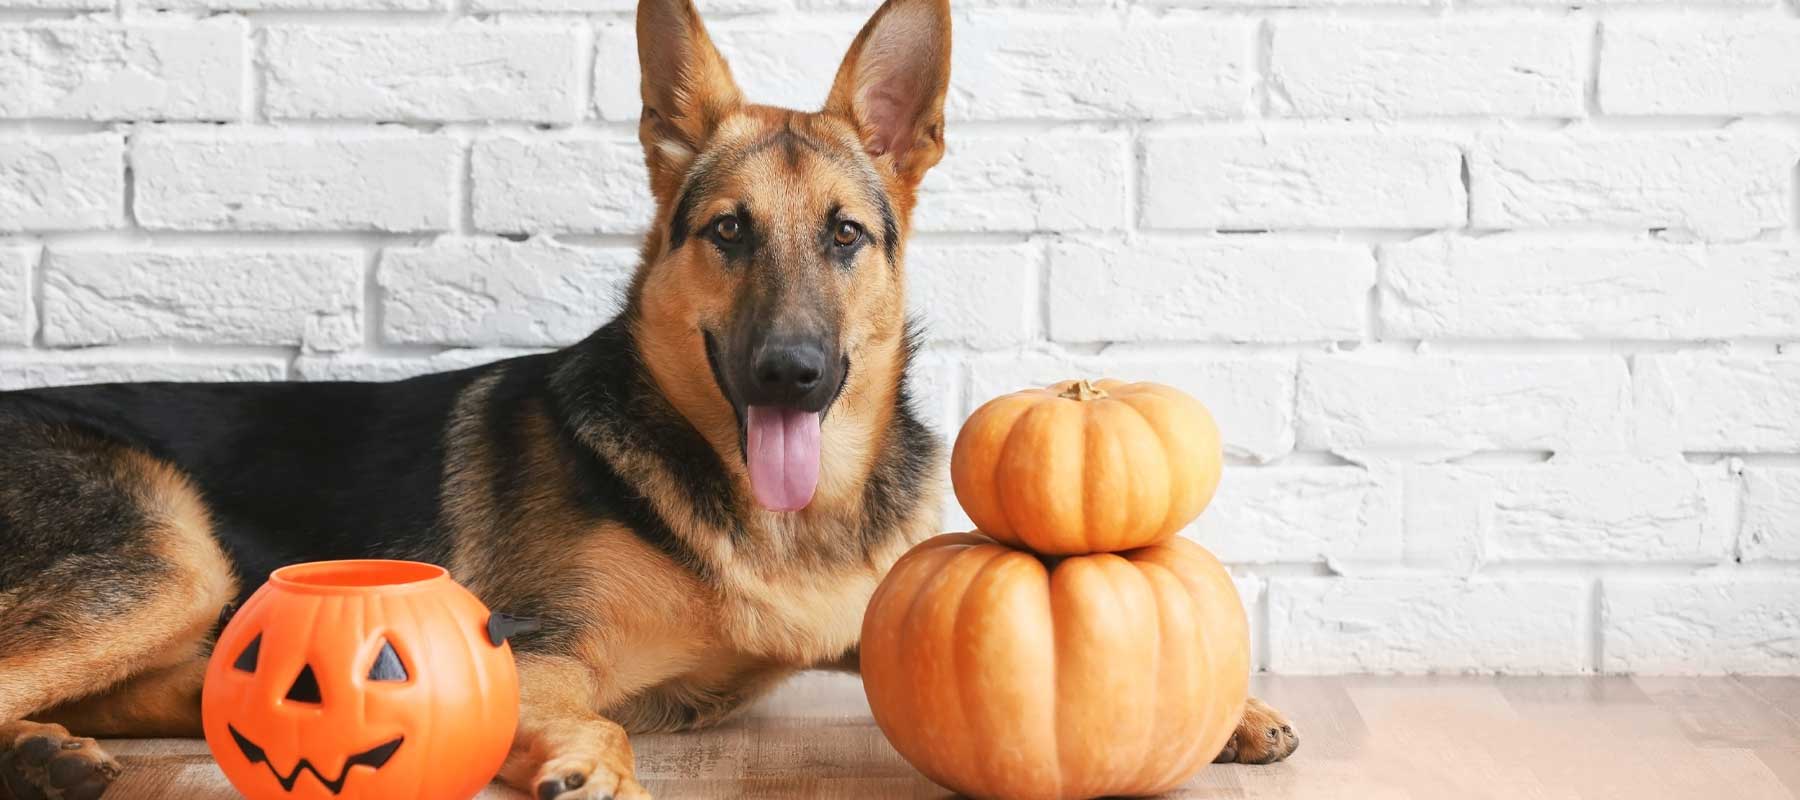 6 tips to keep your dog calm on Halloween night 